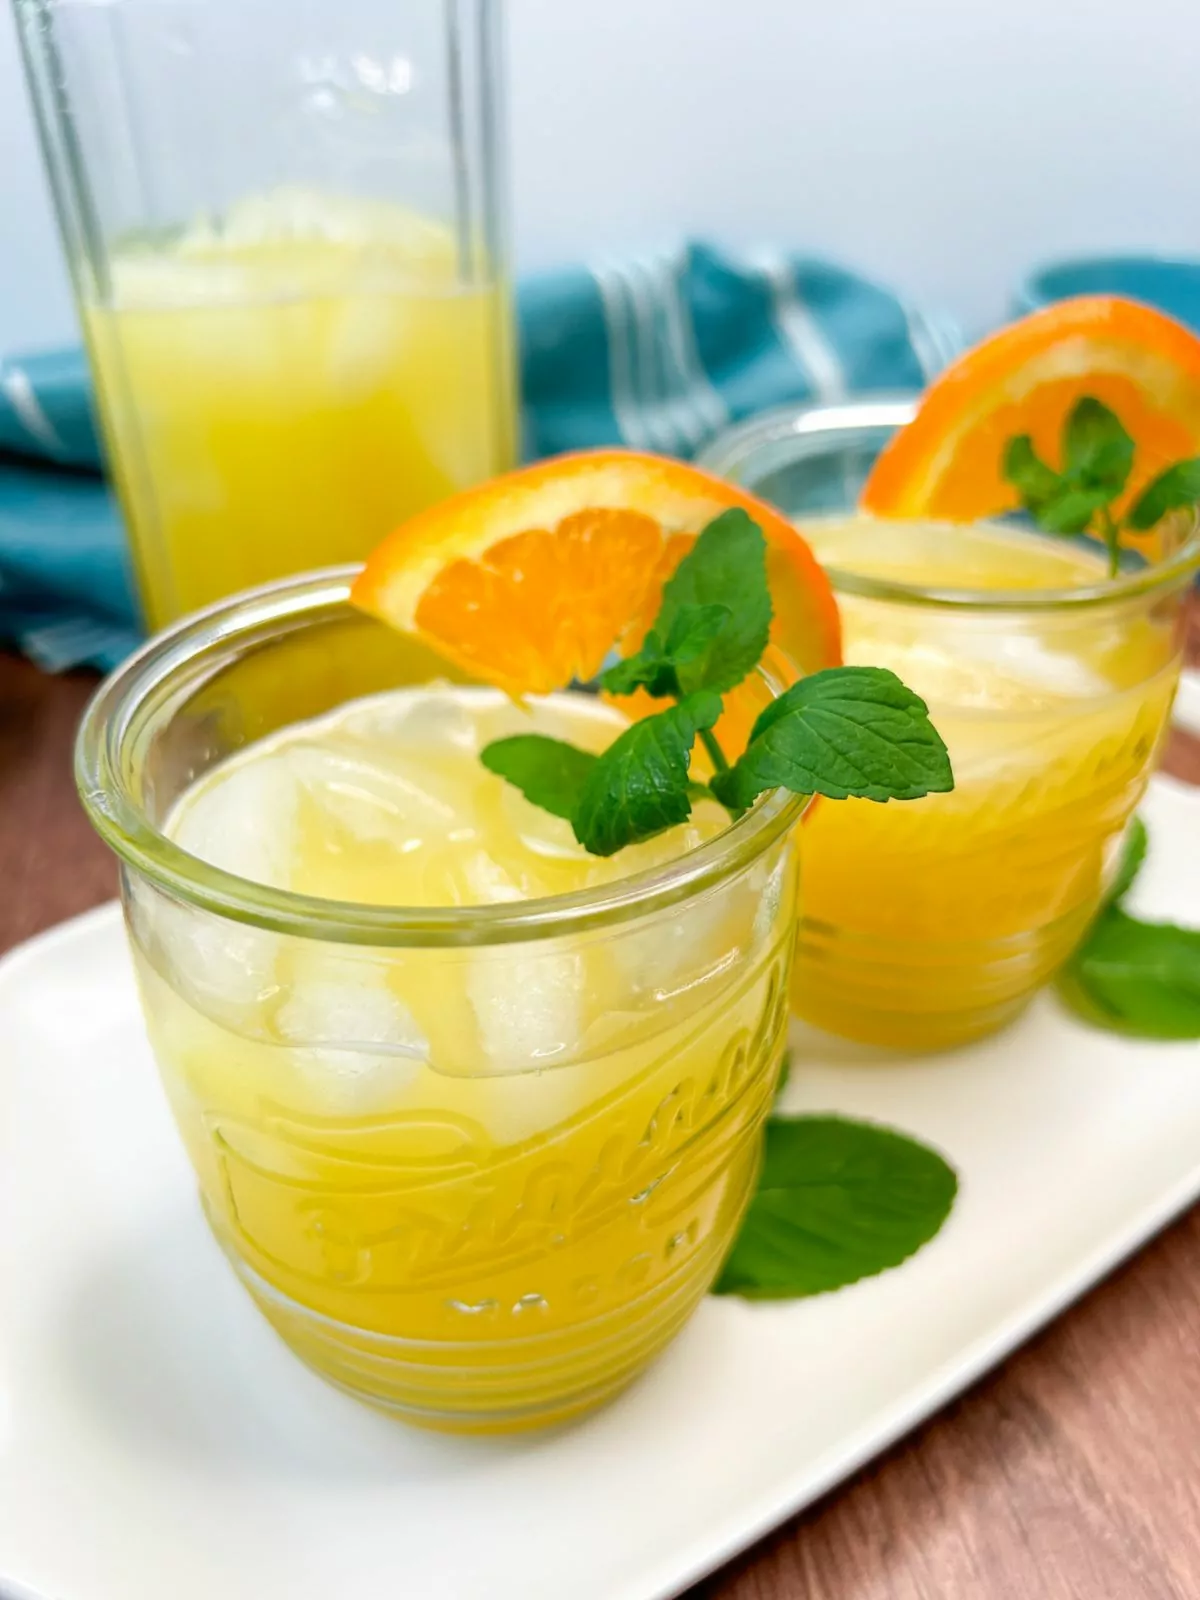 coconut water and orange juice drink served